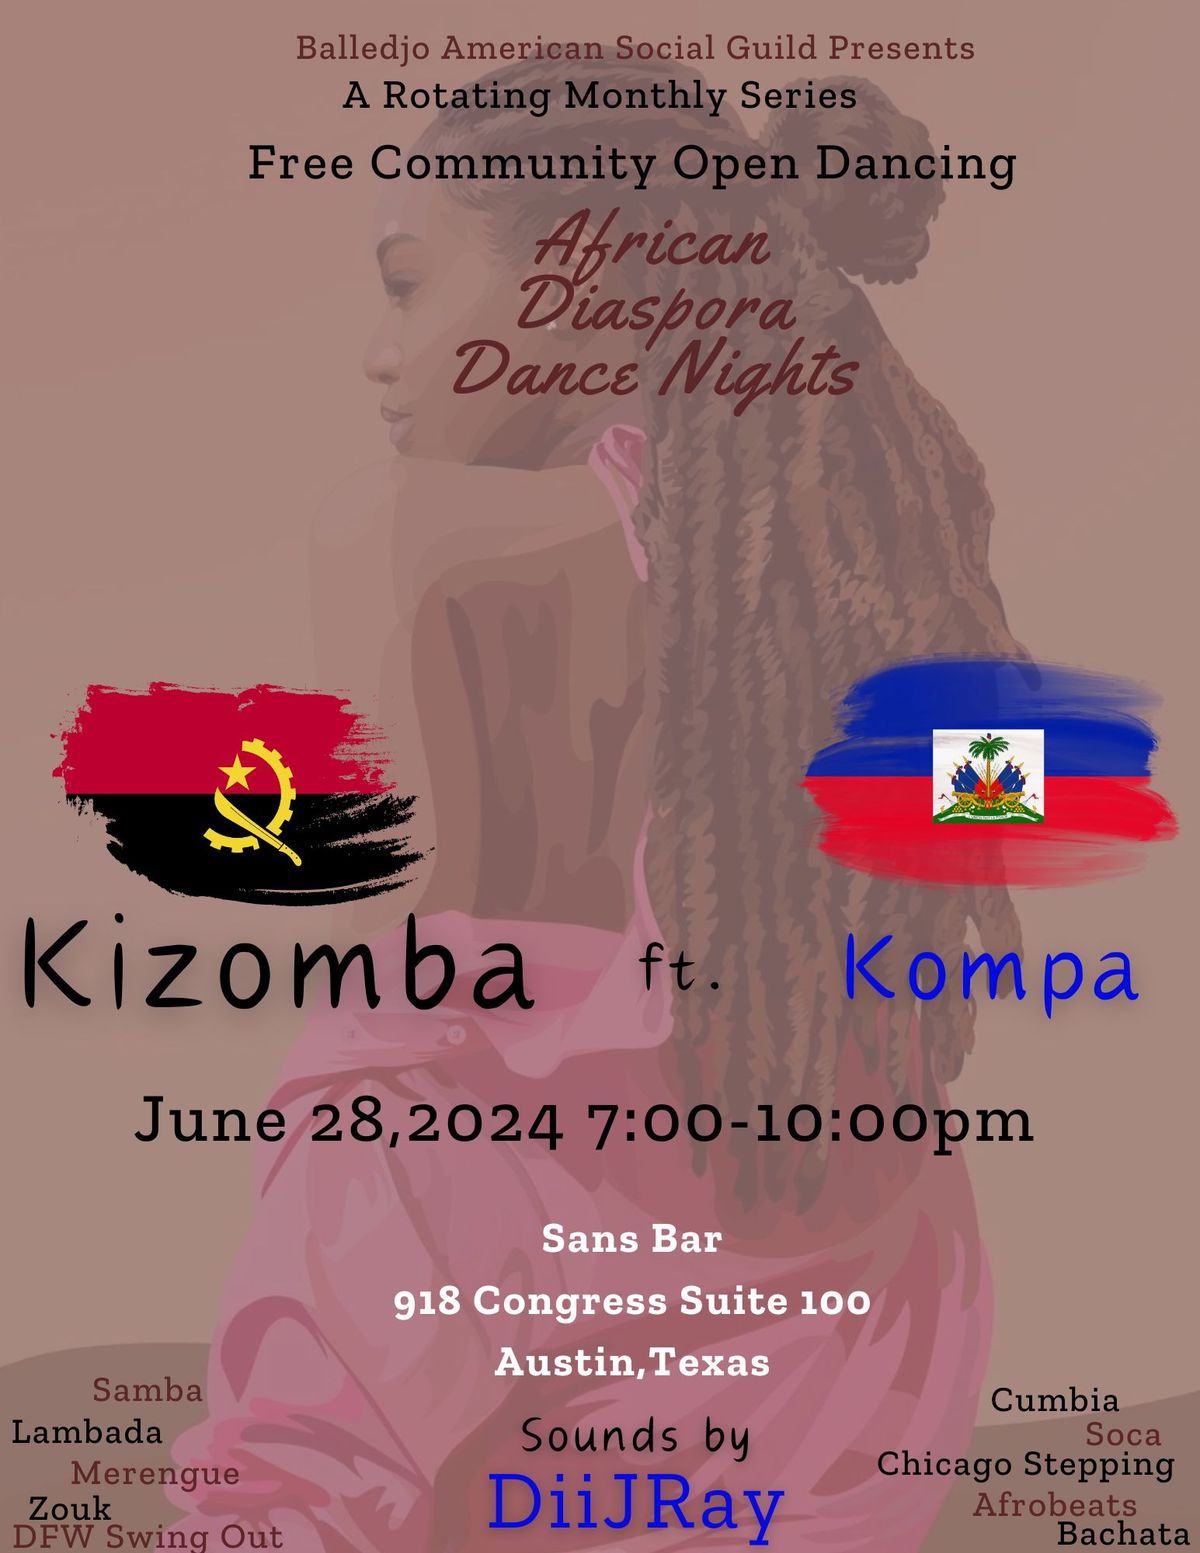 African Diaspora Dance Nights - Kizomba ft. Kompa